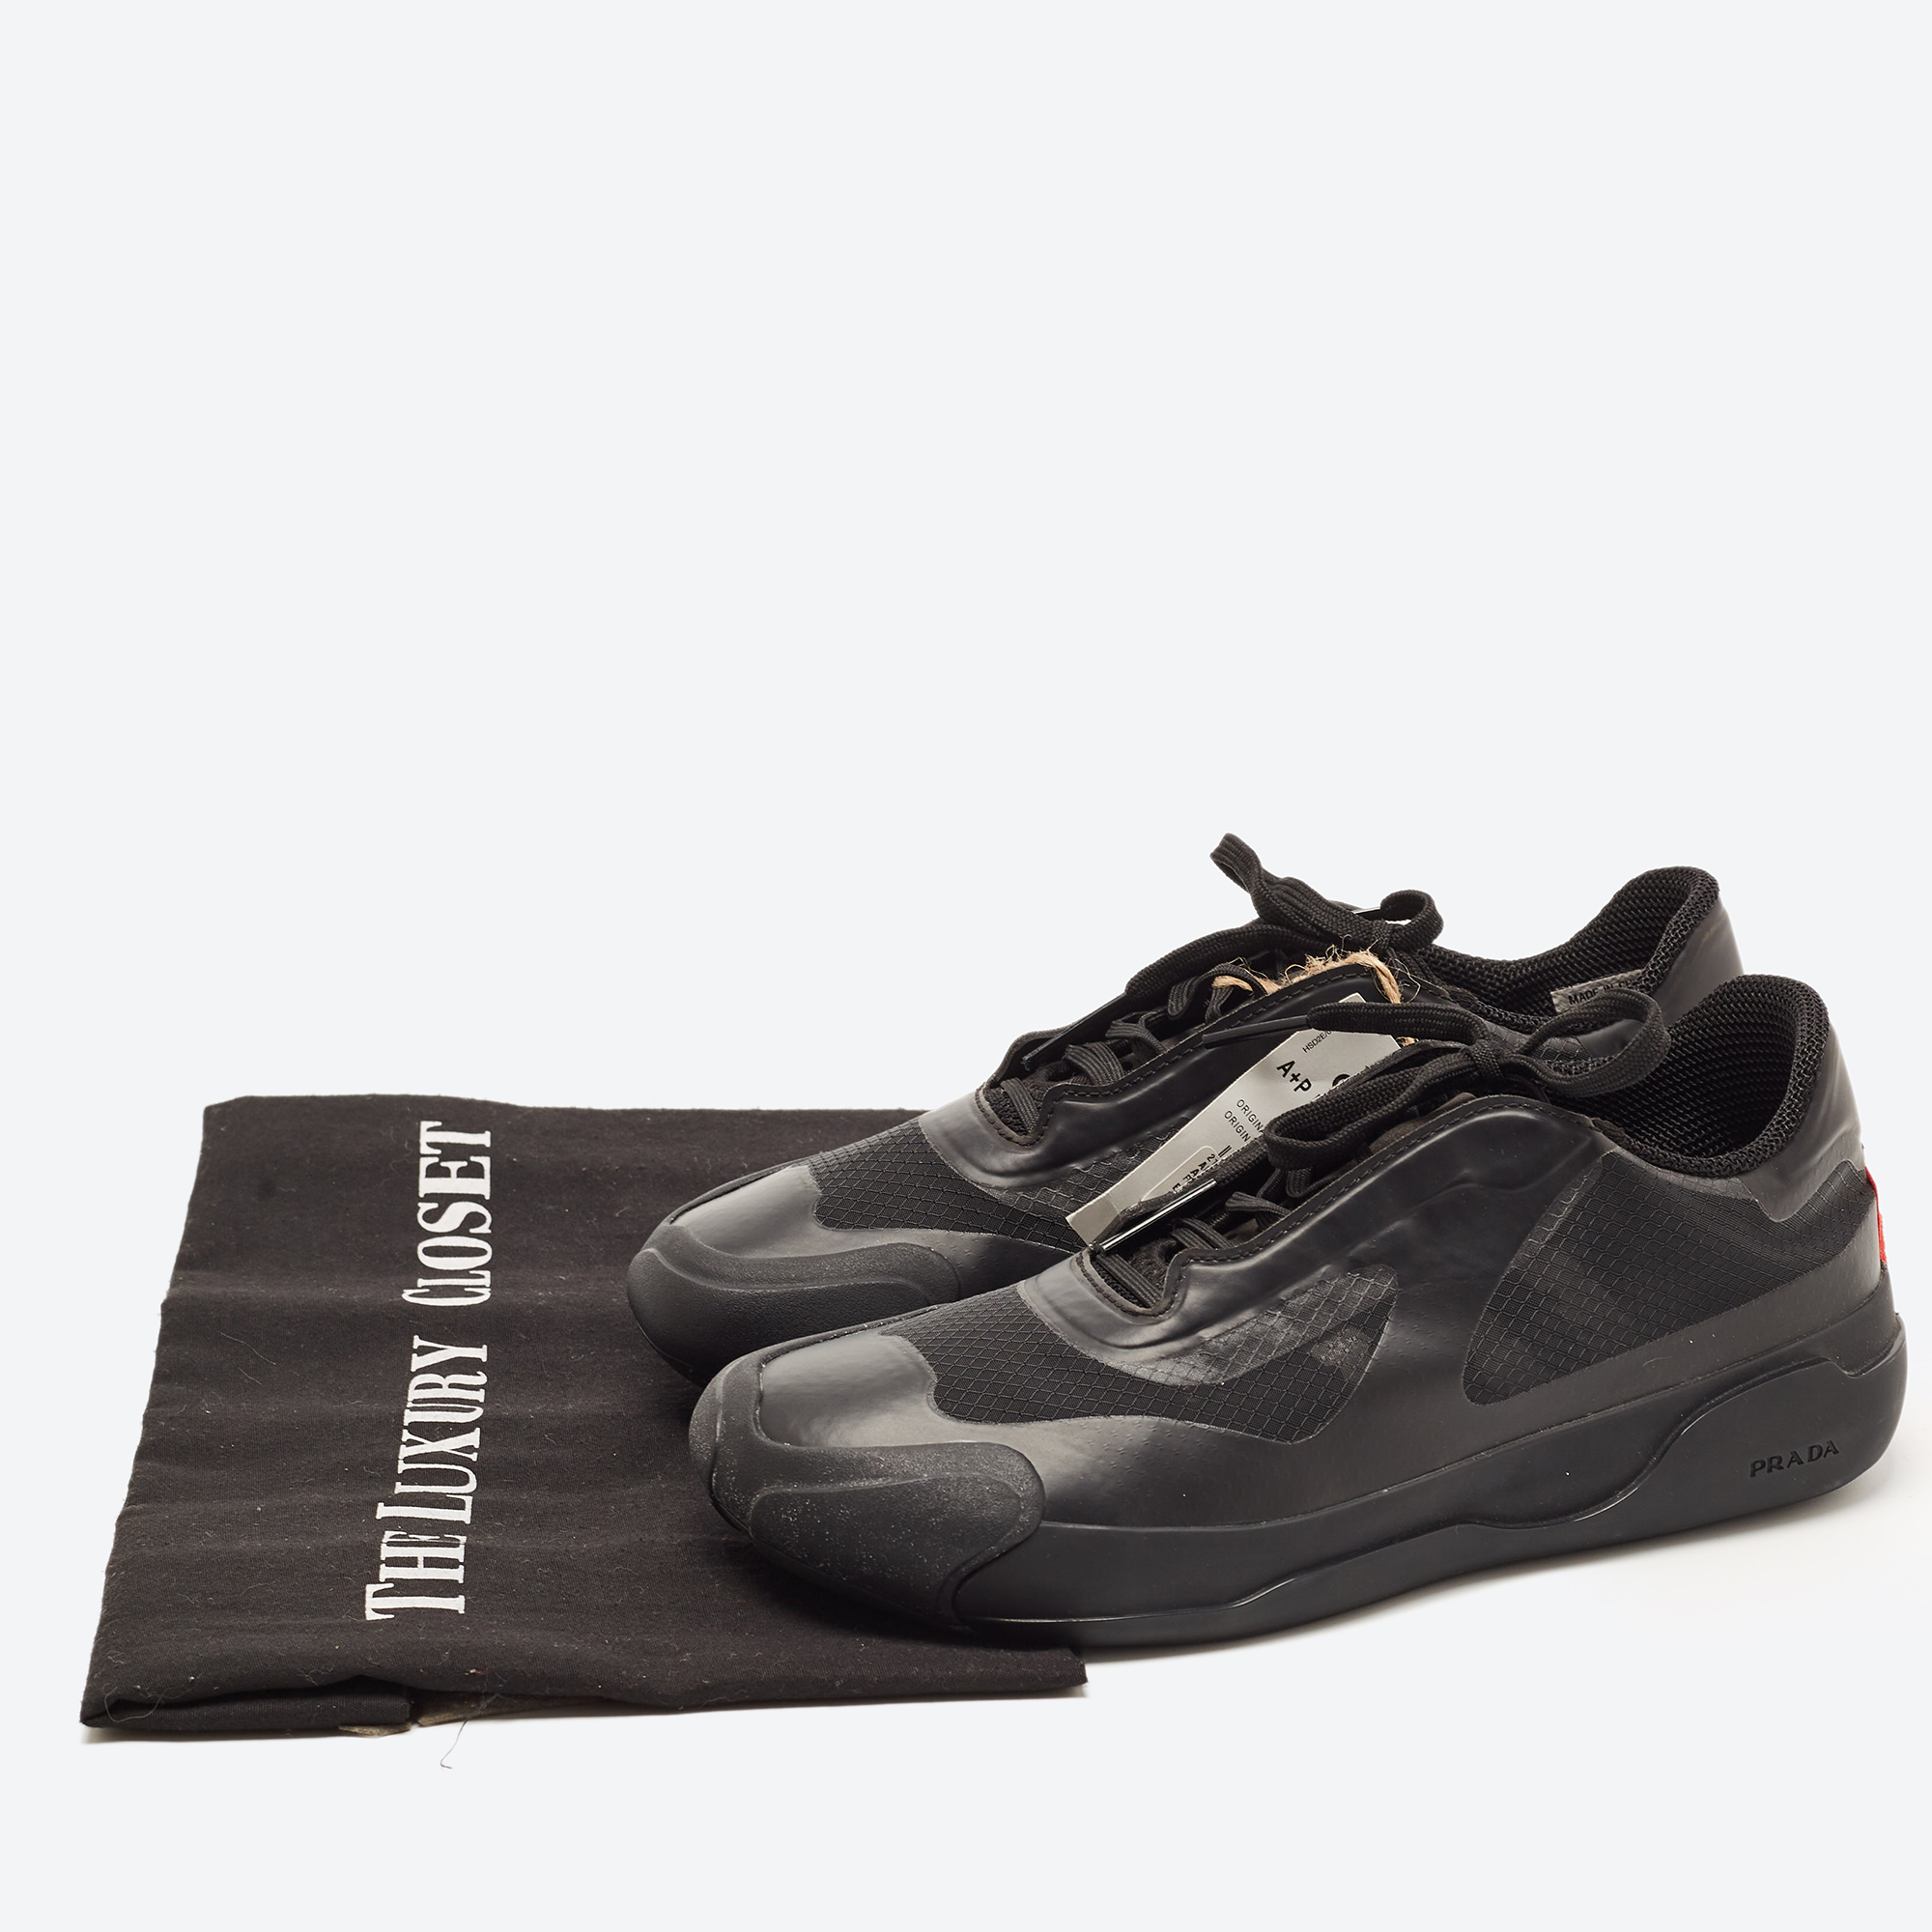 Adidas X Prada Black Mesh A+P Luna Sneakers Size 36 2/3